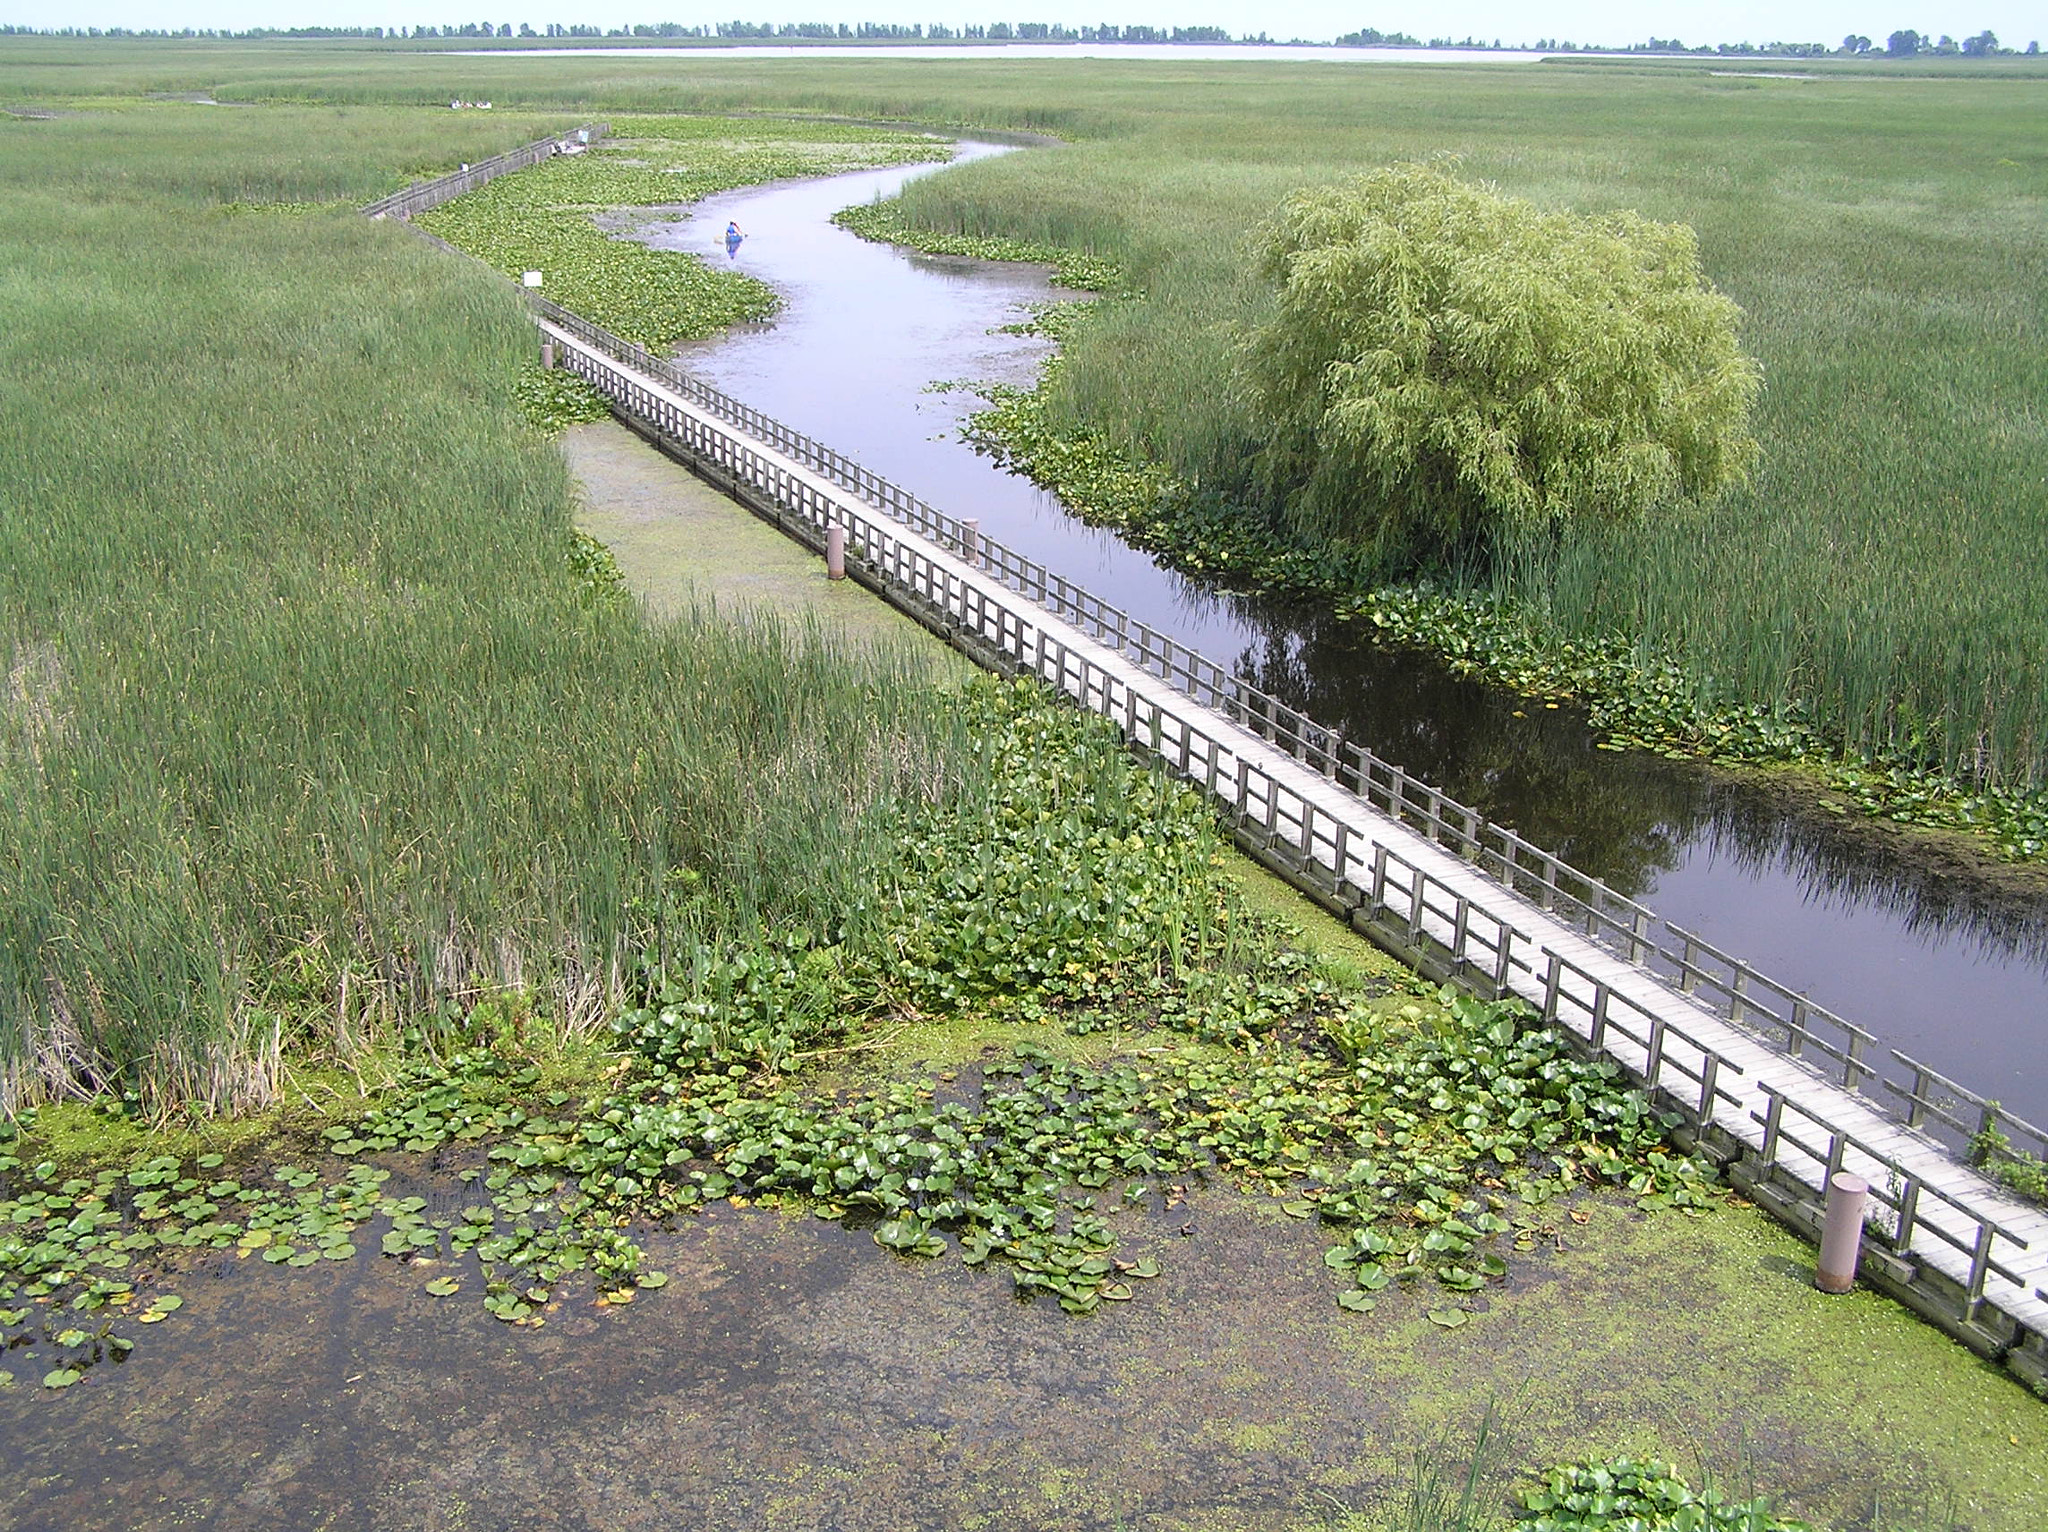 Olympus C770UZ sample photo. Pt. pelee marsh in summer, seen from tower photography